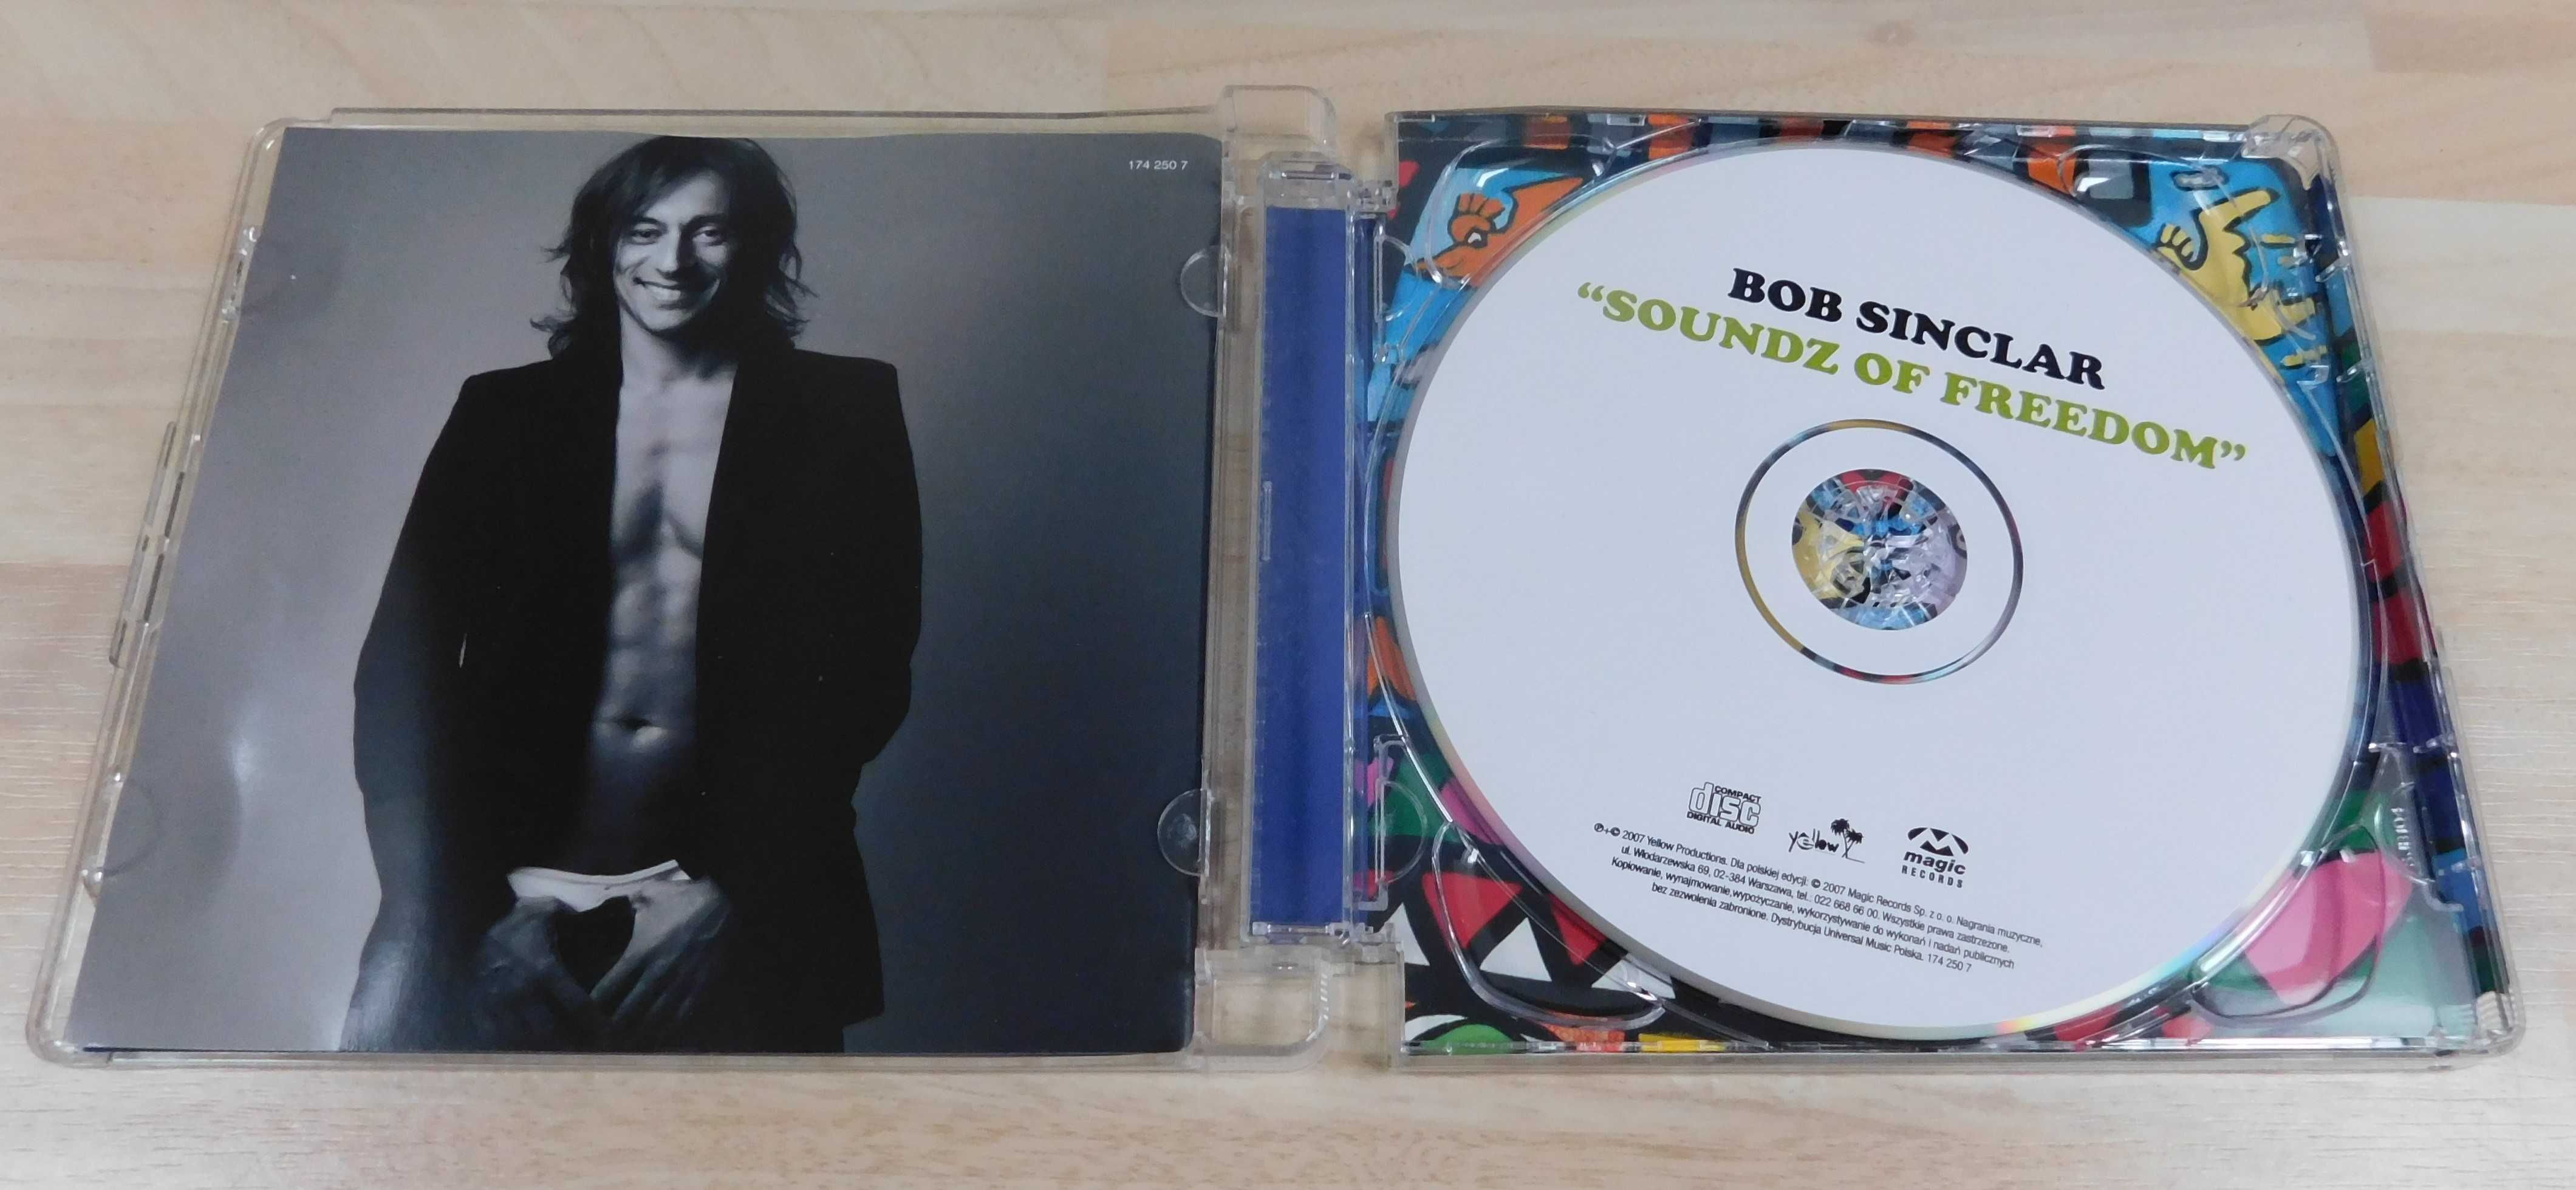 Bob Sinclar Soundz of freedom płyta CD